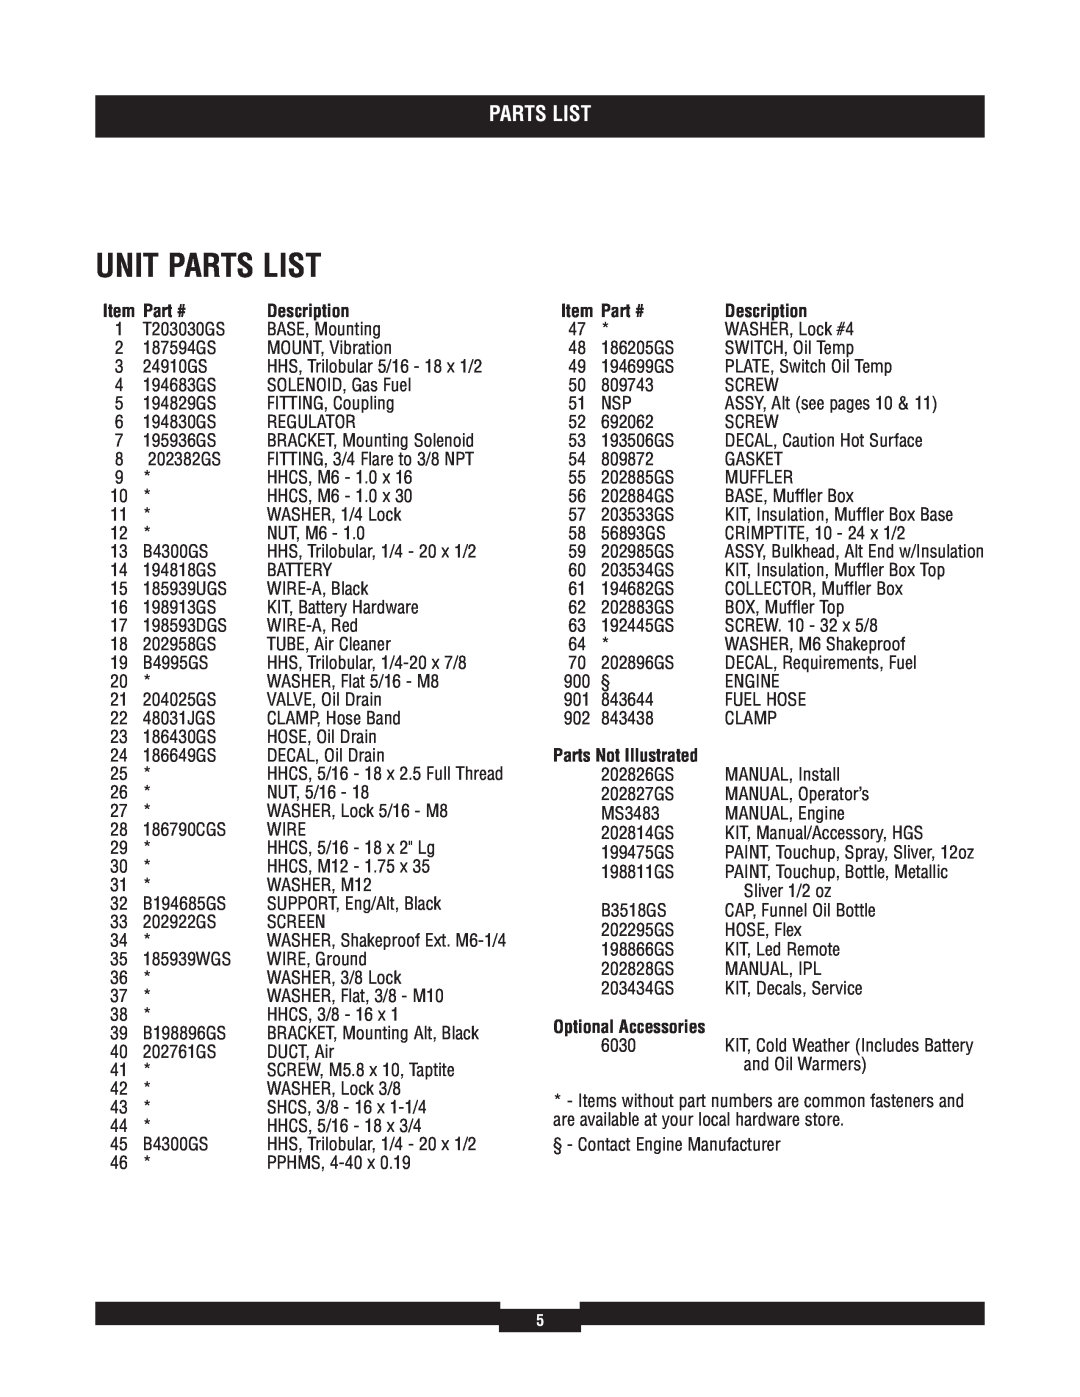 Briggs & Stratton 40211 manual Unit Parts List, Description, Parts Not Illustrated 